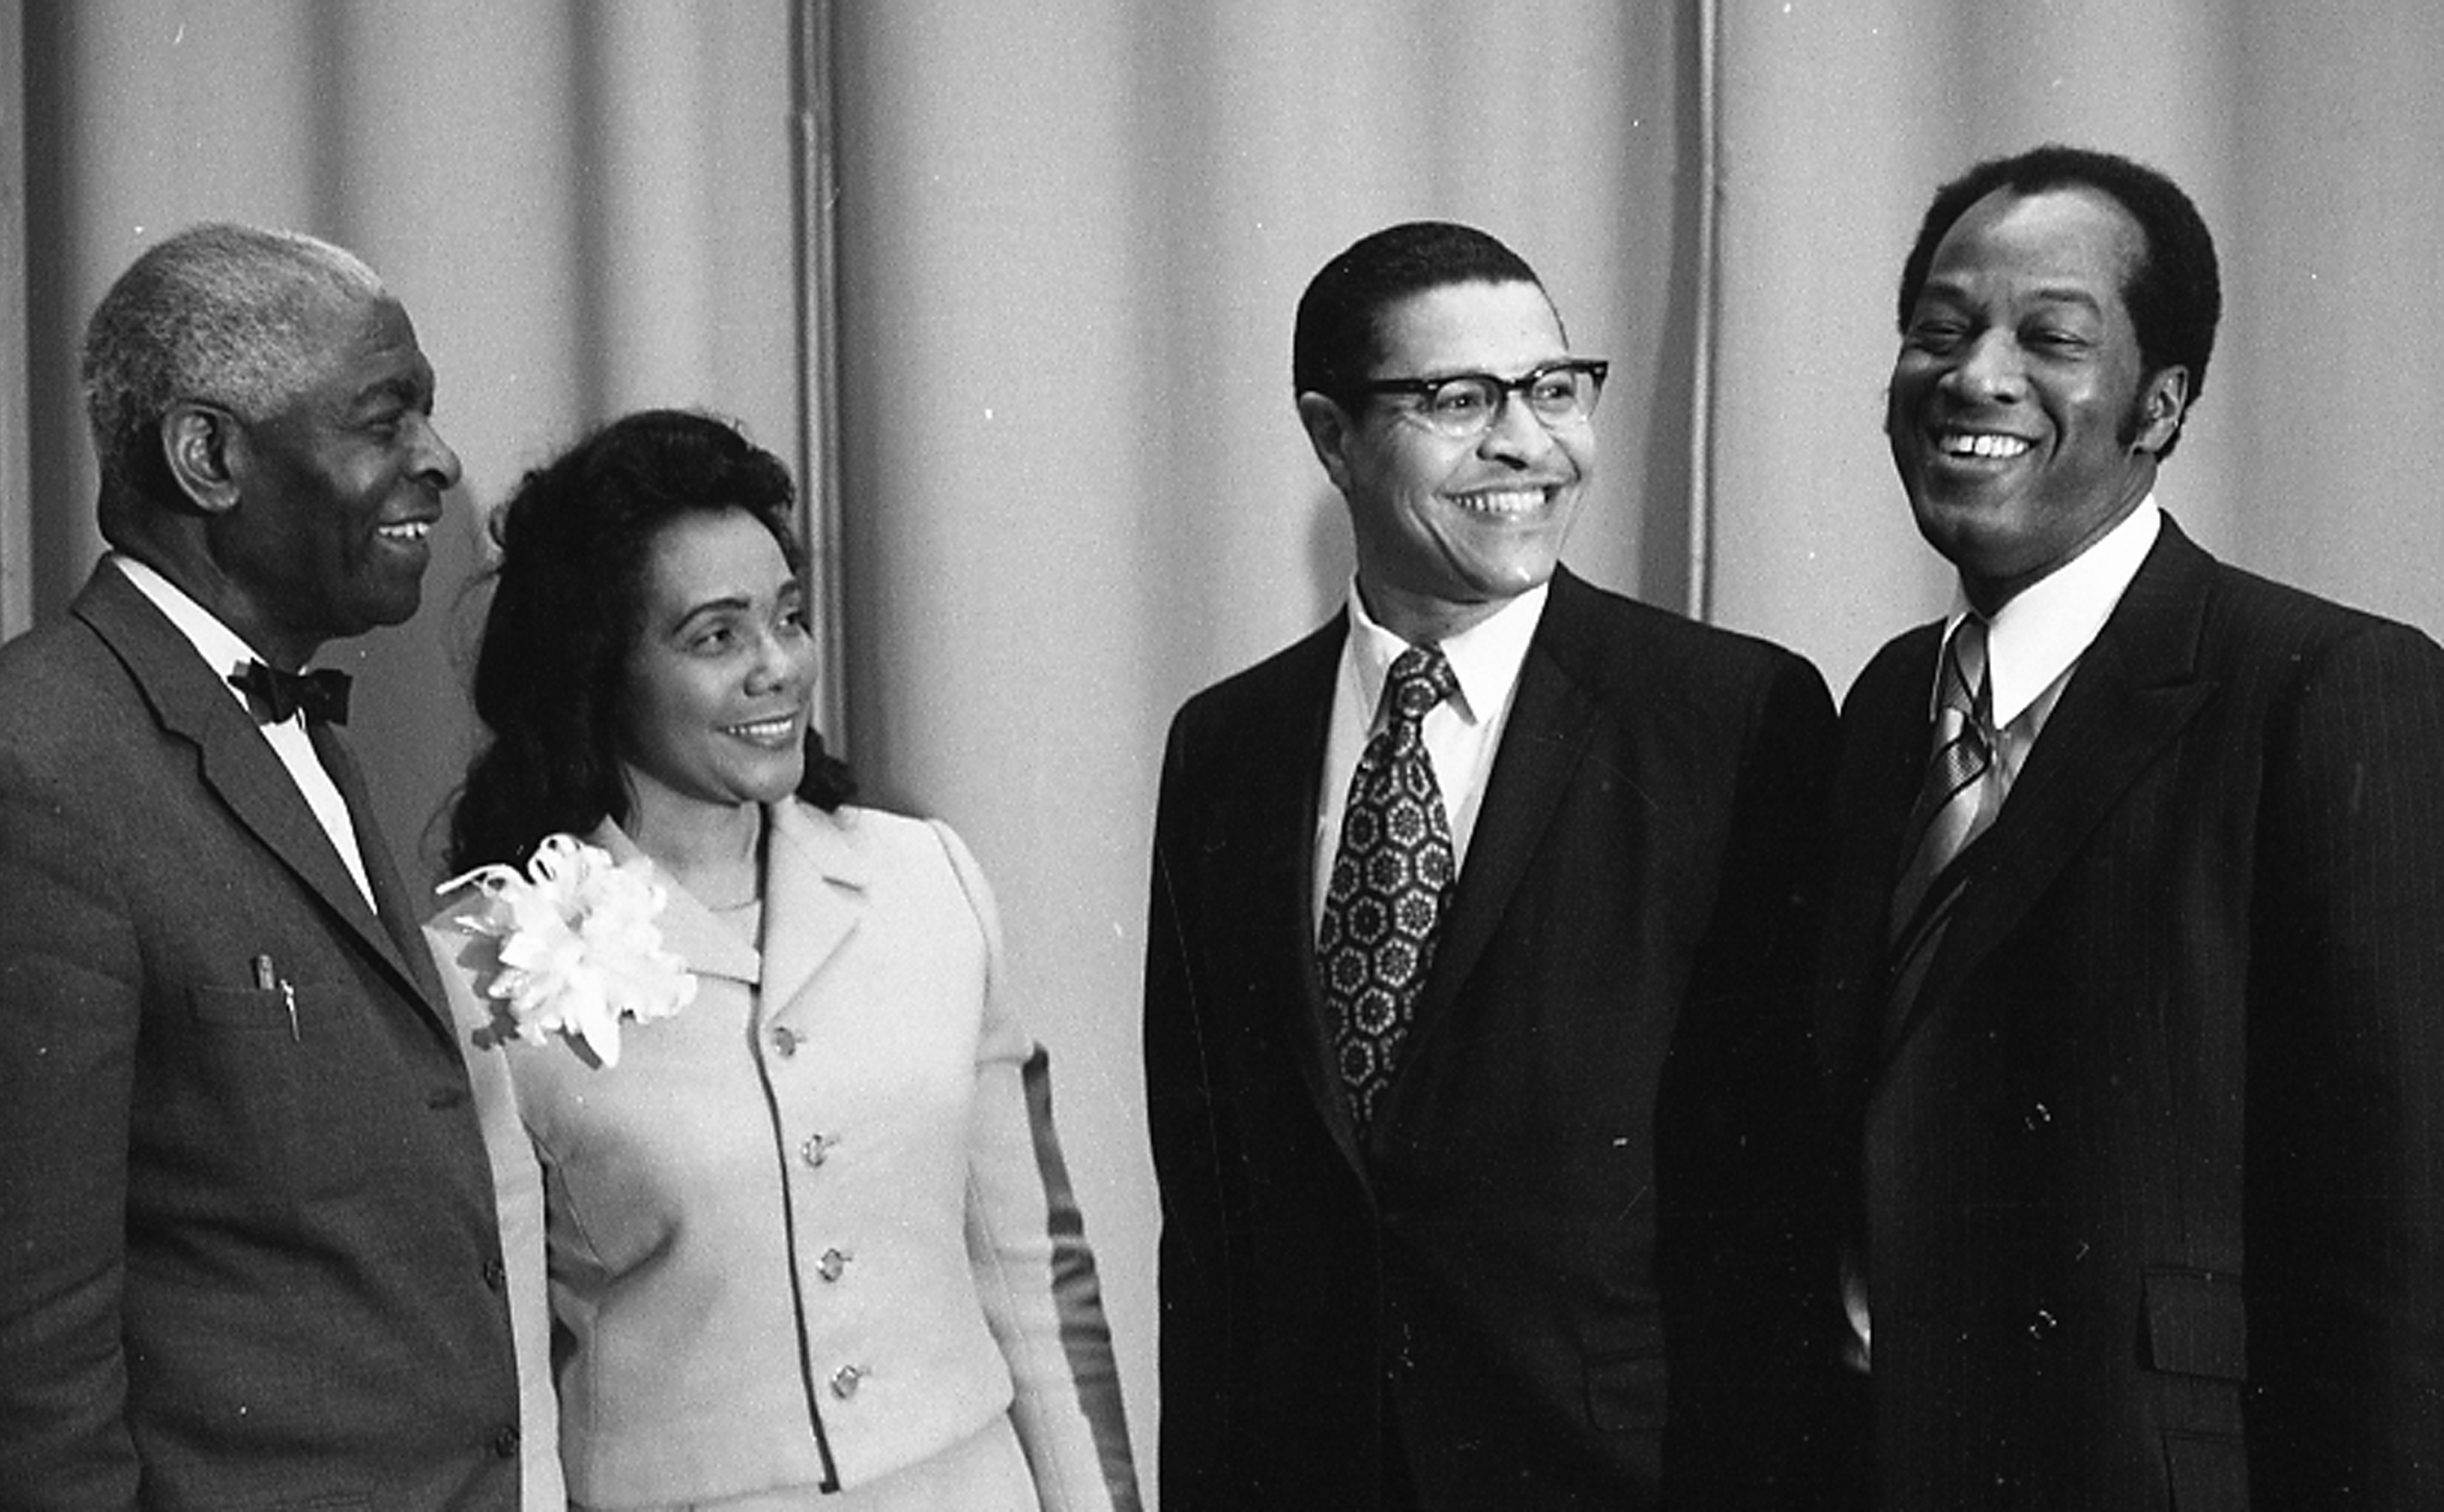 Group photo of Benjamin Mays, Coretta Scott King, Clifton Wharton, Jr., and Robert Green, April 1, 1971